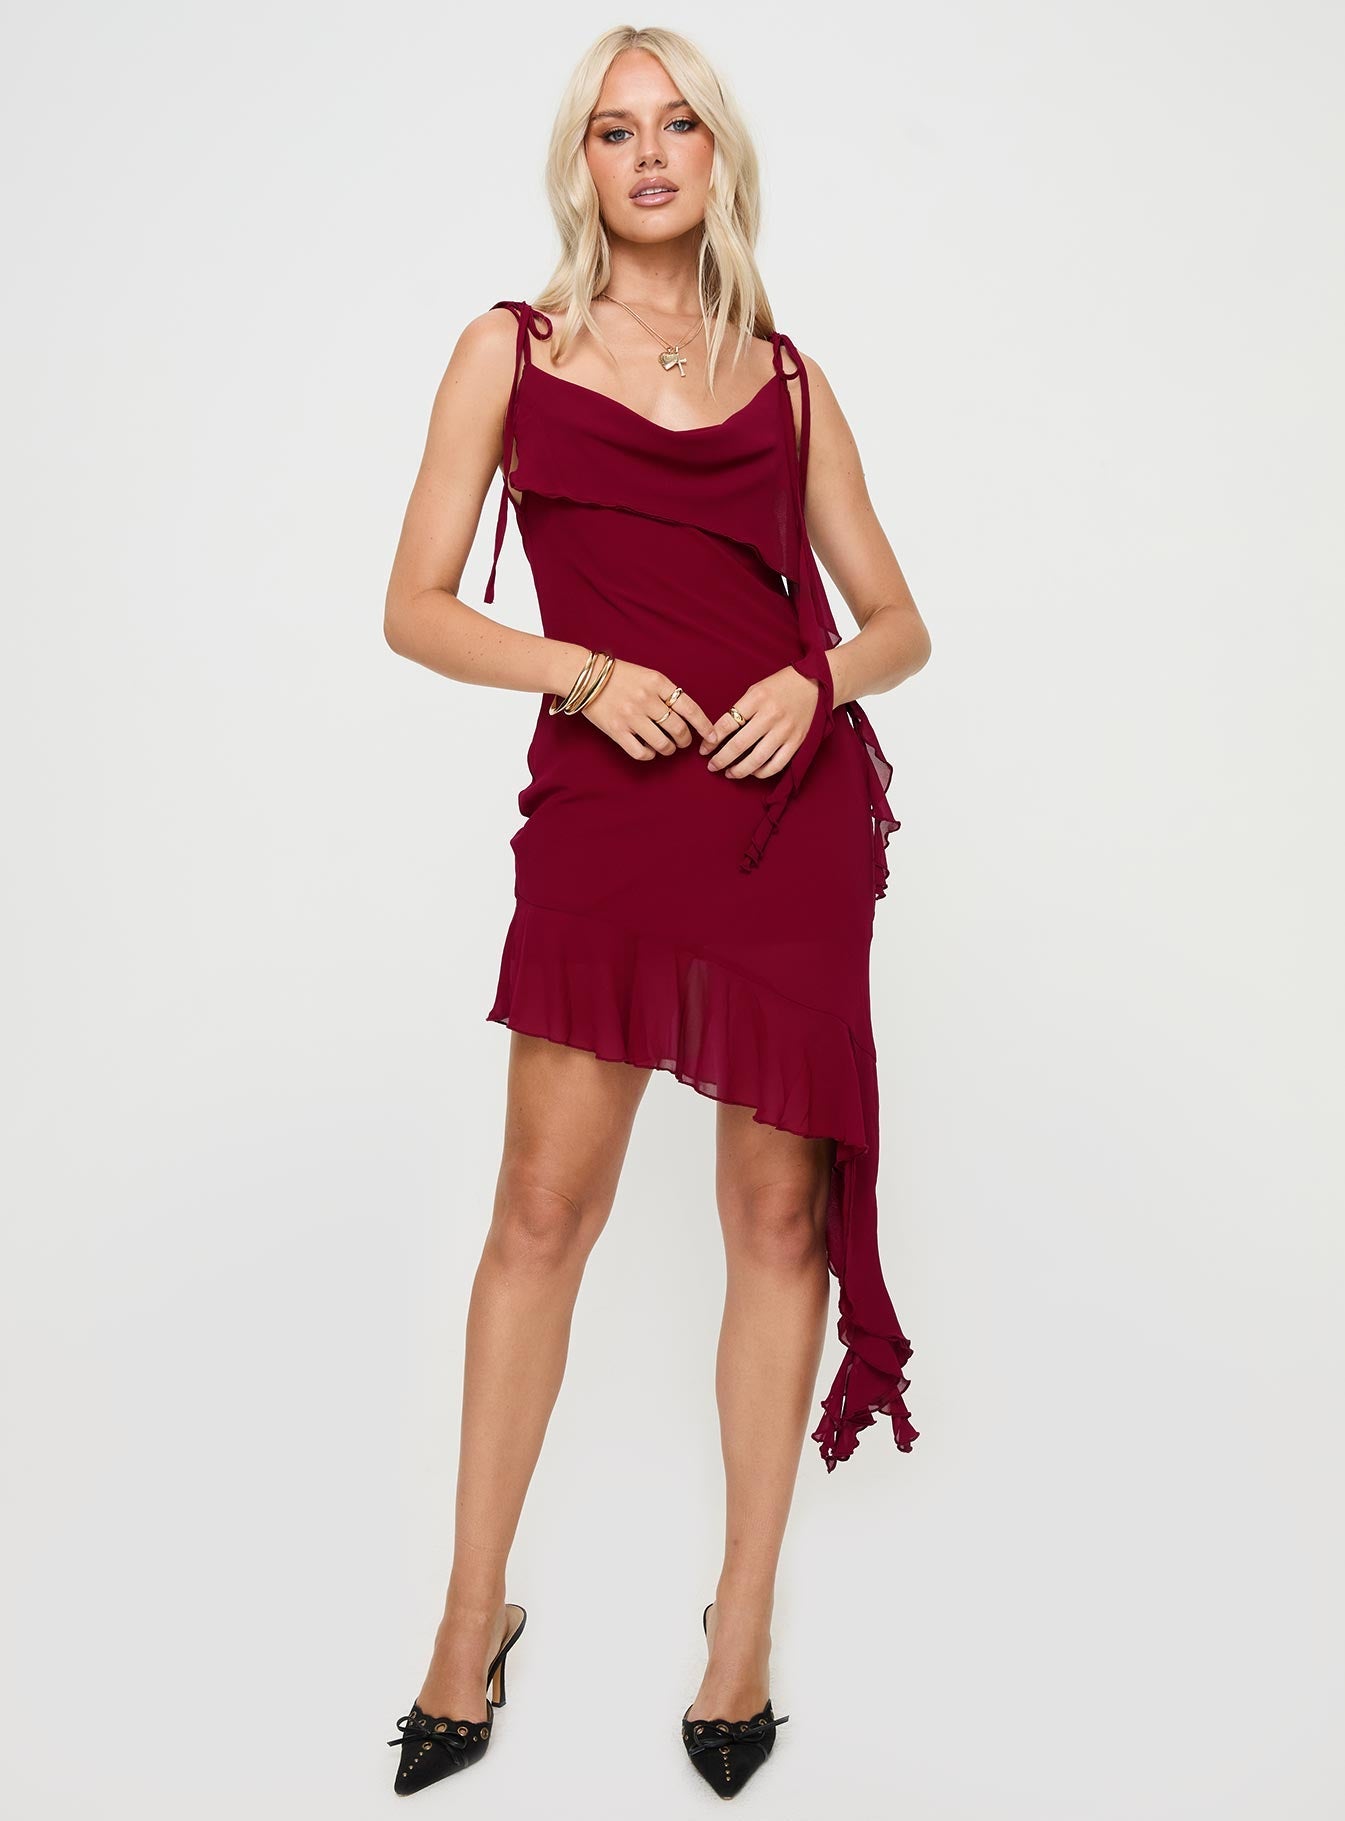 Shop Formal Dress - Dacian Mini Dress Burgundy sixth image